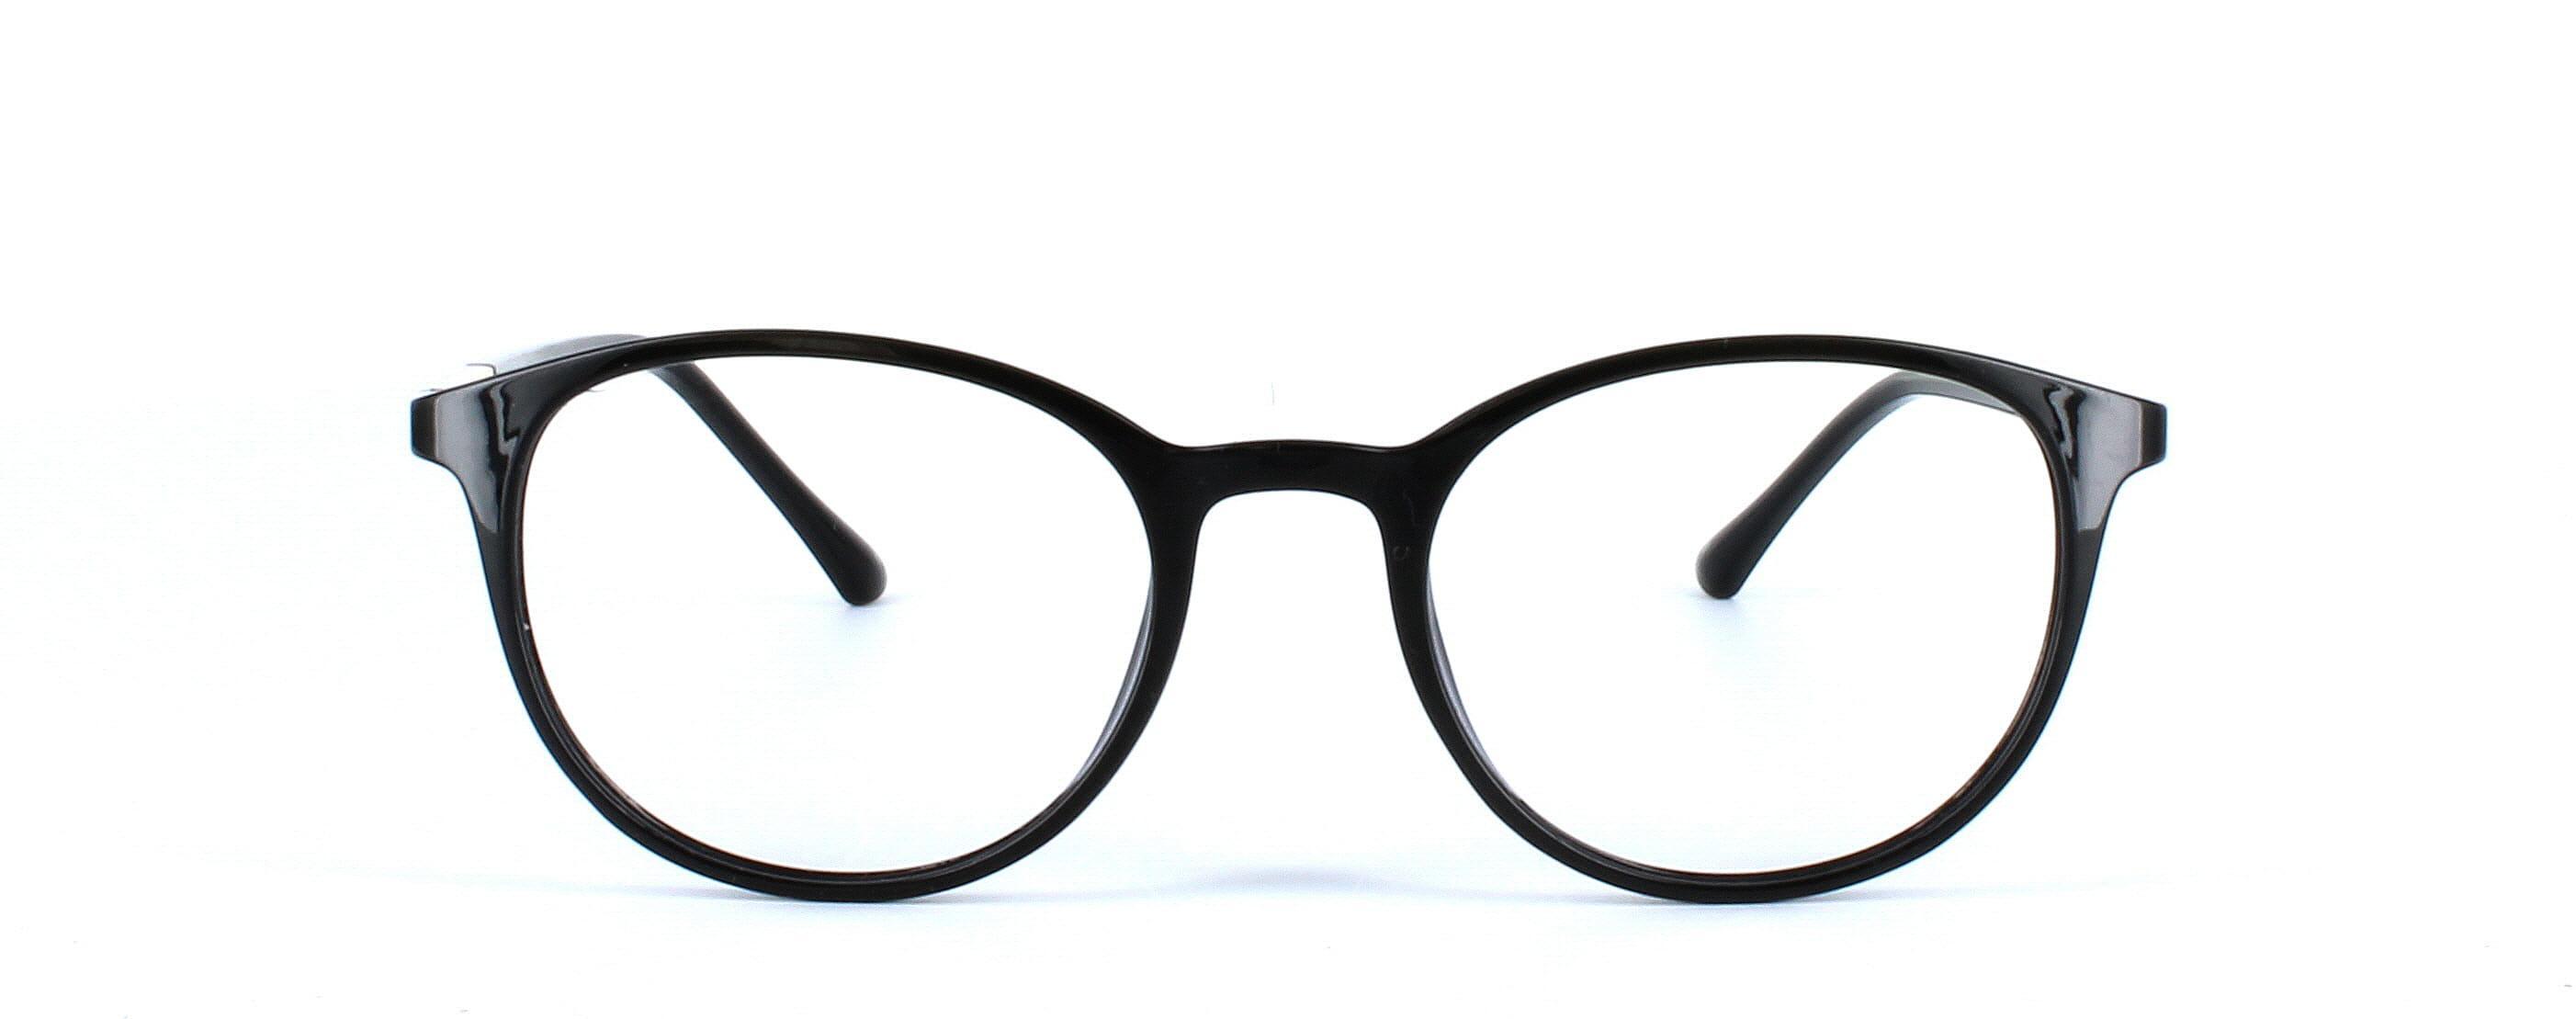 Mensa - Ladies black round shaped plastic glasses - image view 5